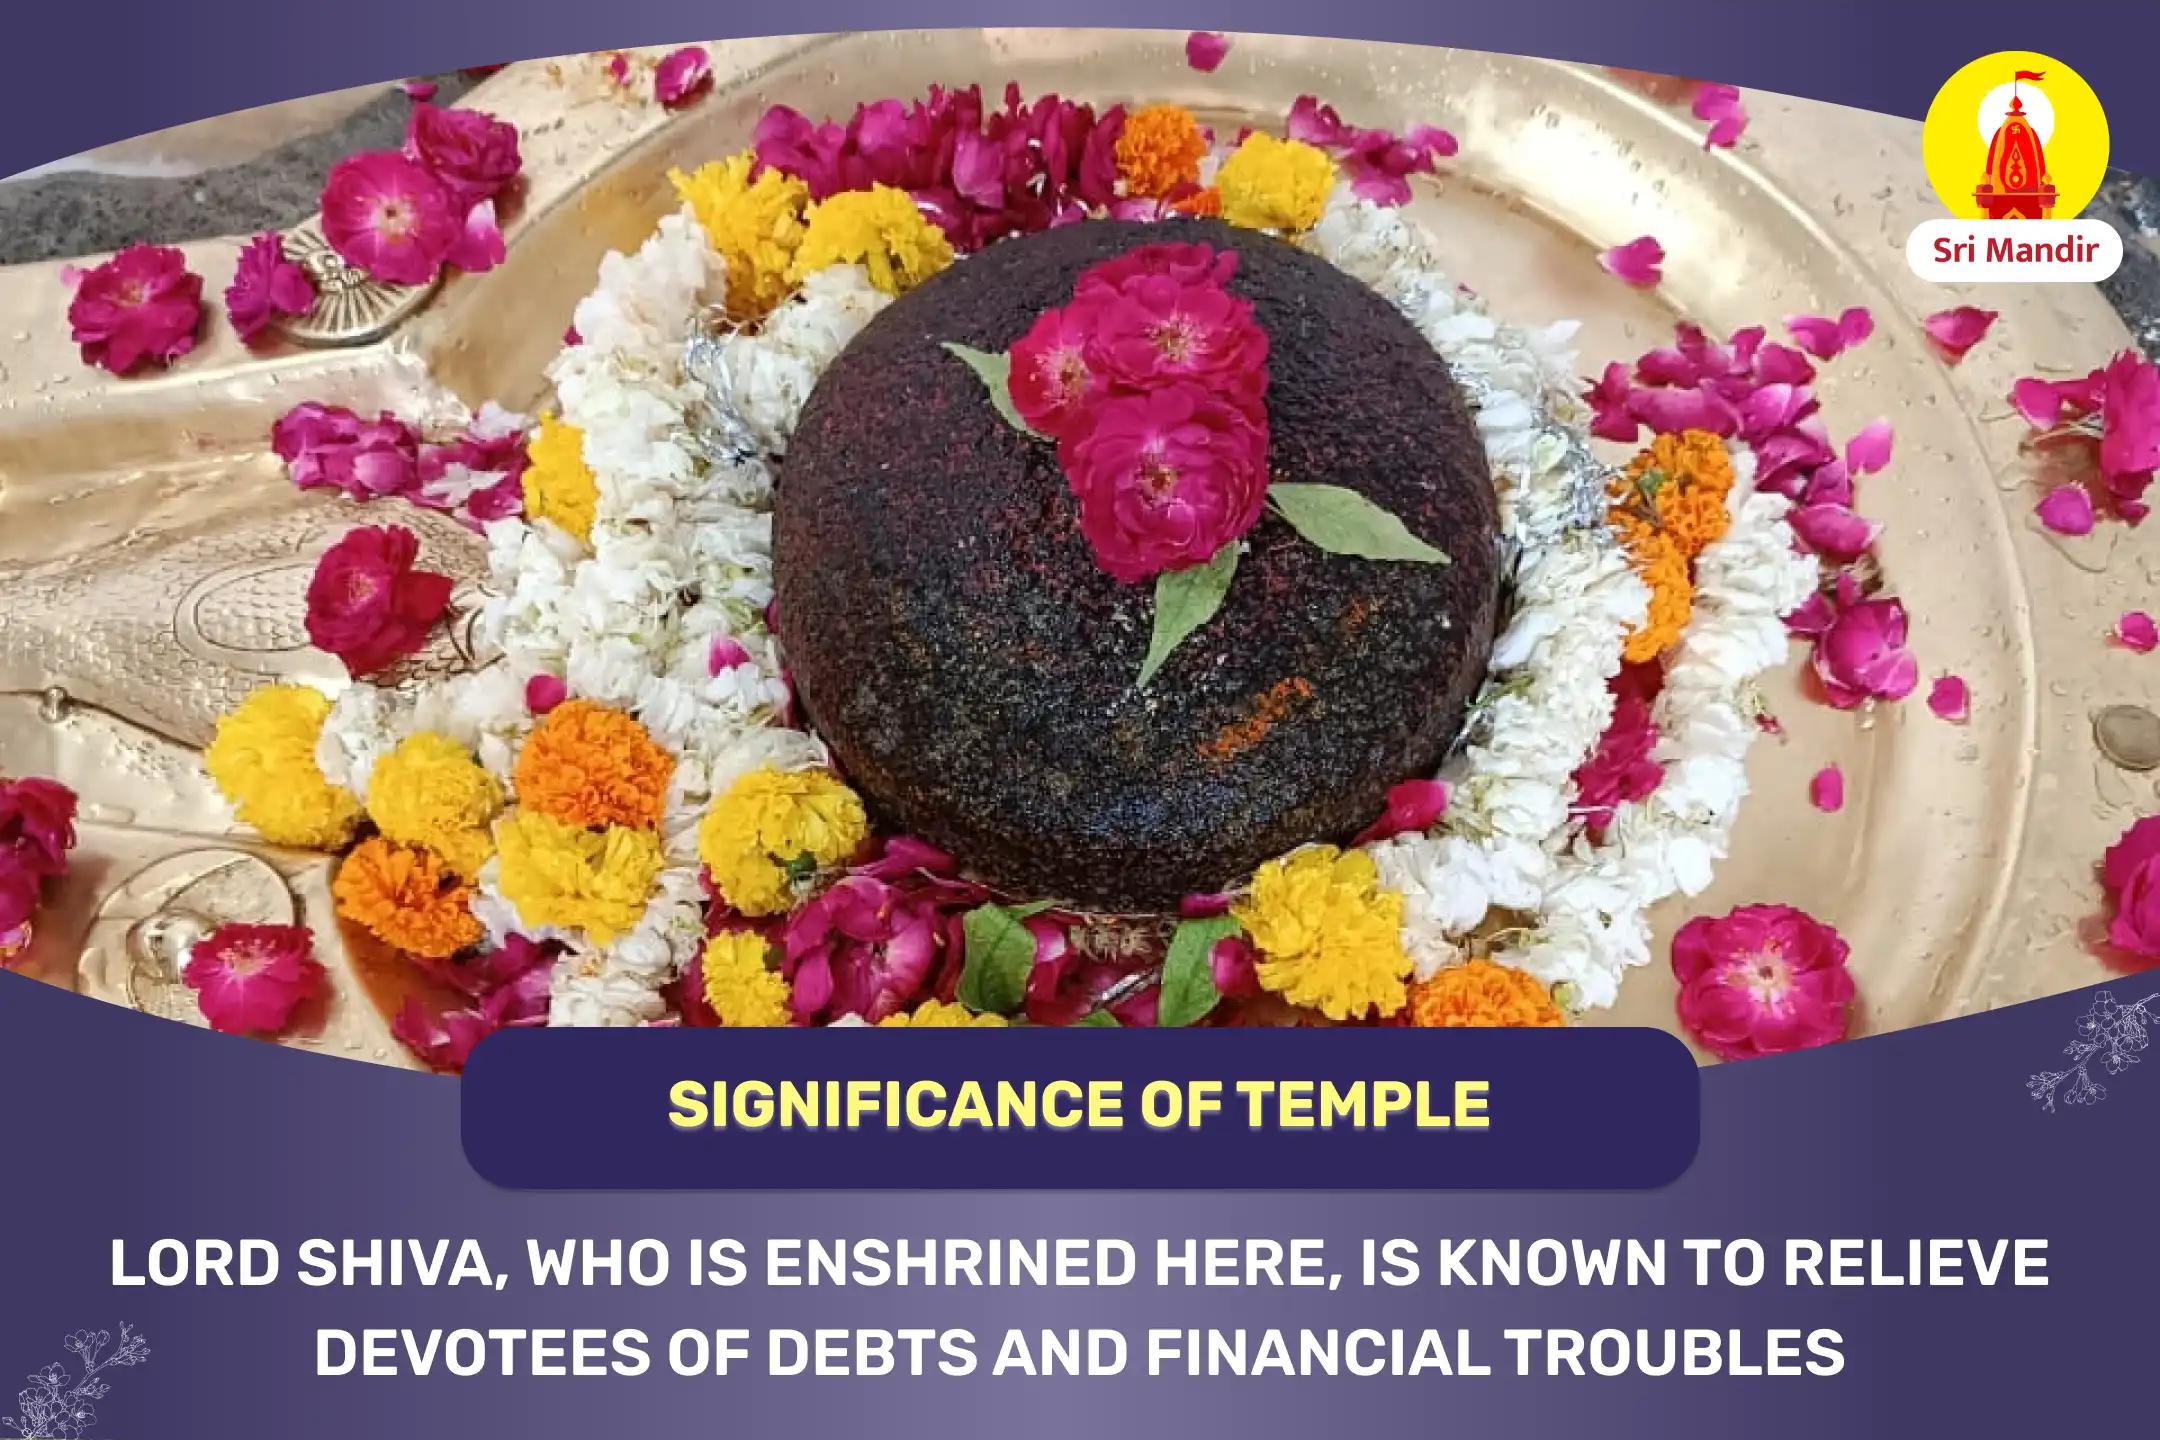  Mahashivratri Special Rin Mukti Shiva Havan and Mankameshwar Rudrabhishek Puja for Debt Relief and Accumulation of Wealth